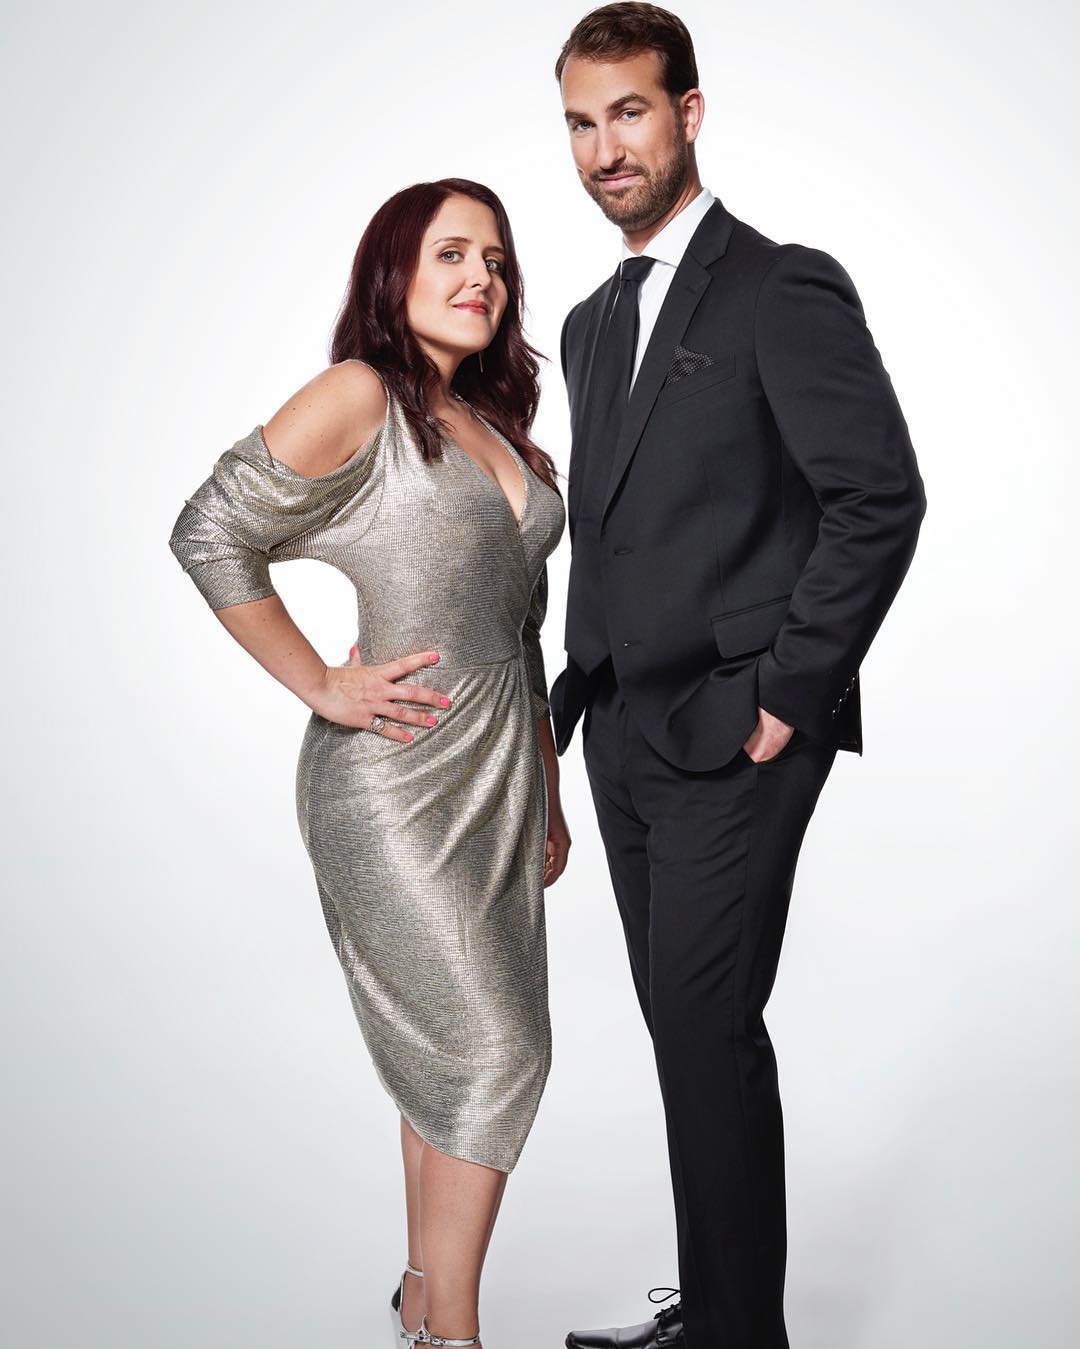 Evan Kaufman & Rebecca Vigil: "Your Love, Our Musical"